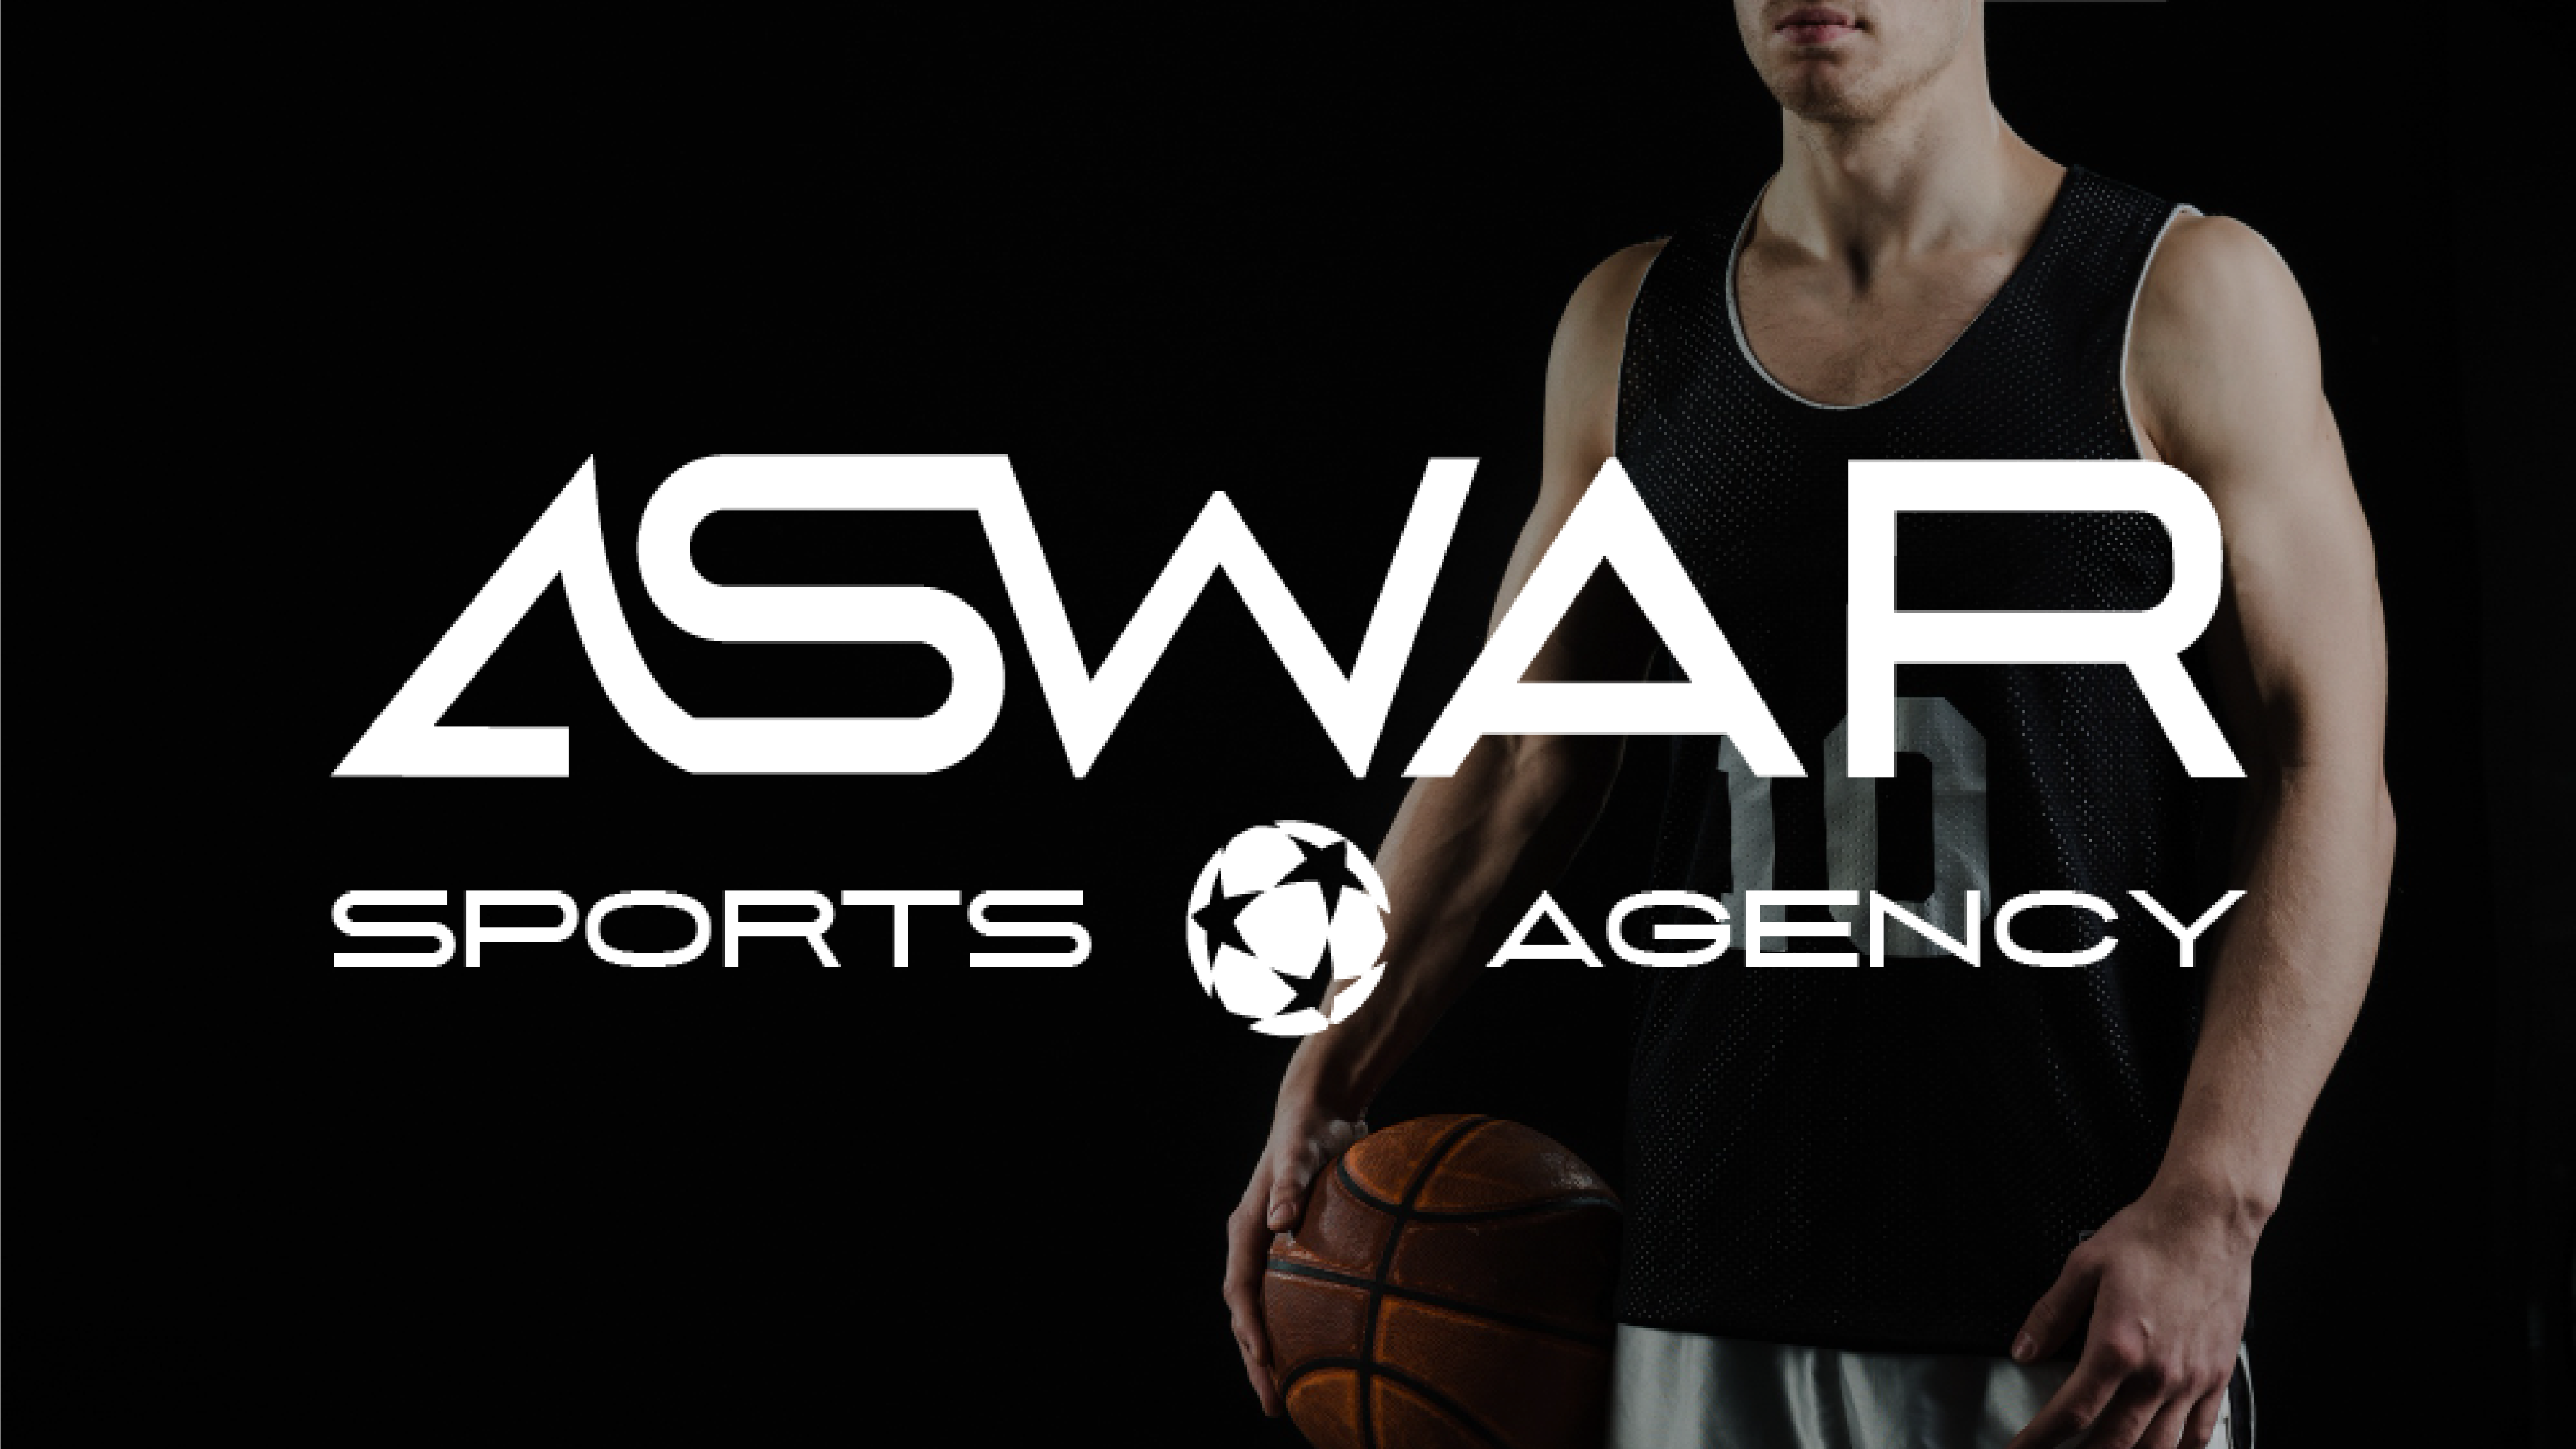 ASWAR Sports Agency – Branding